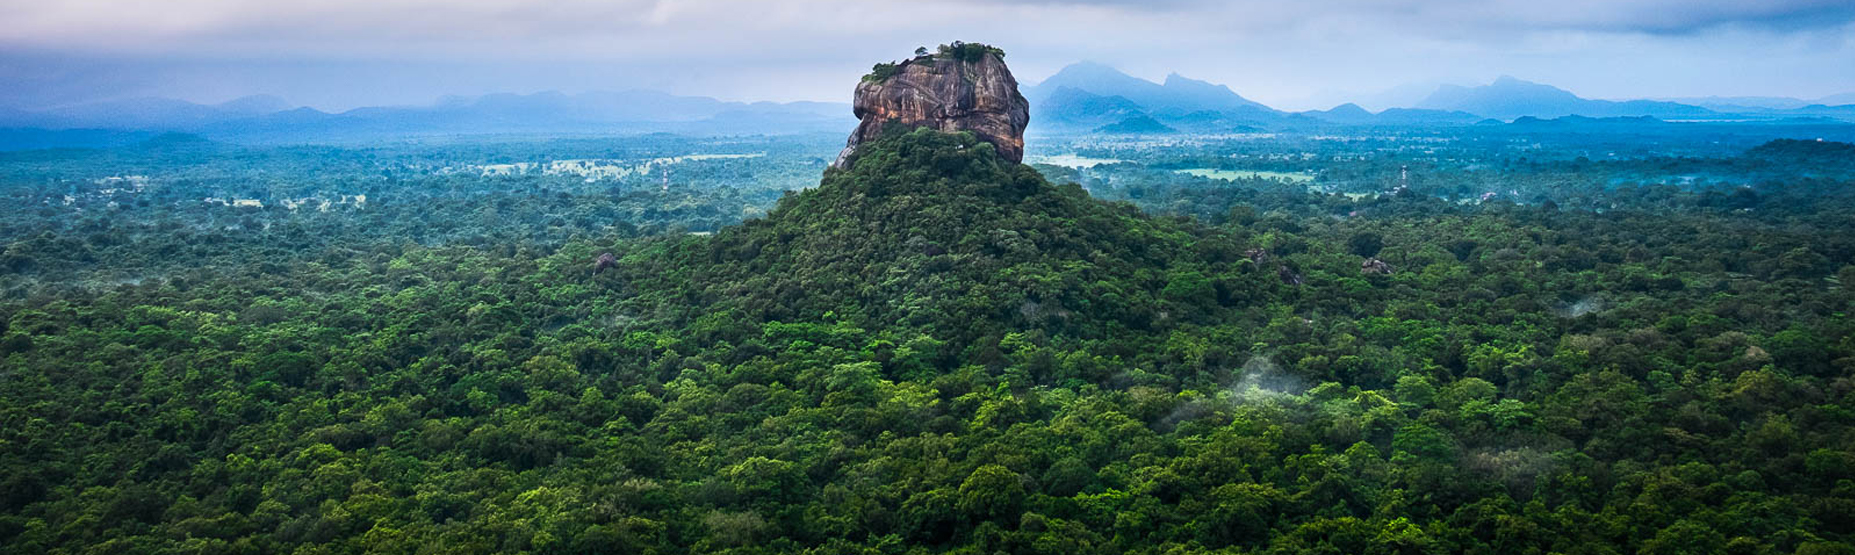 The best destination guide - Sri Lanka Holiday Guru